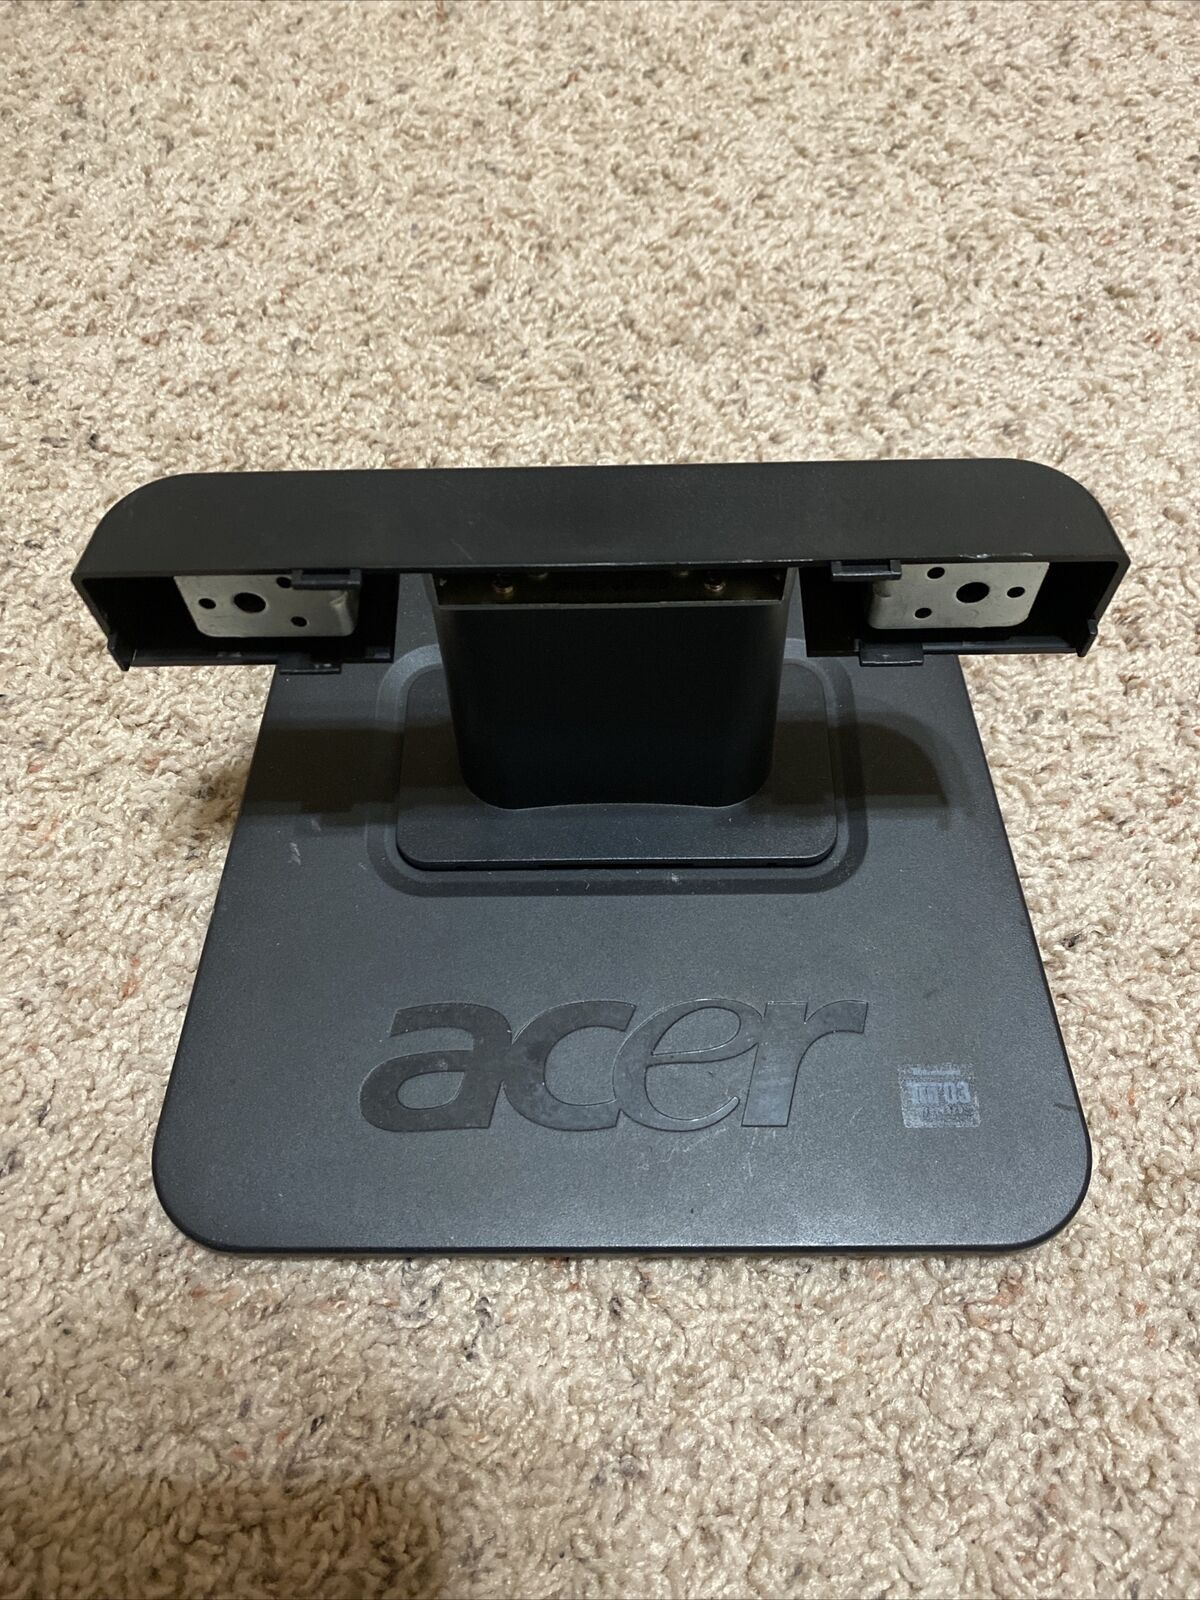 Acer monitor stand - original model